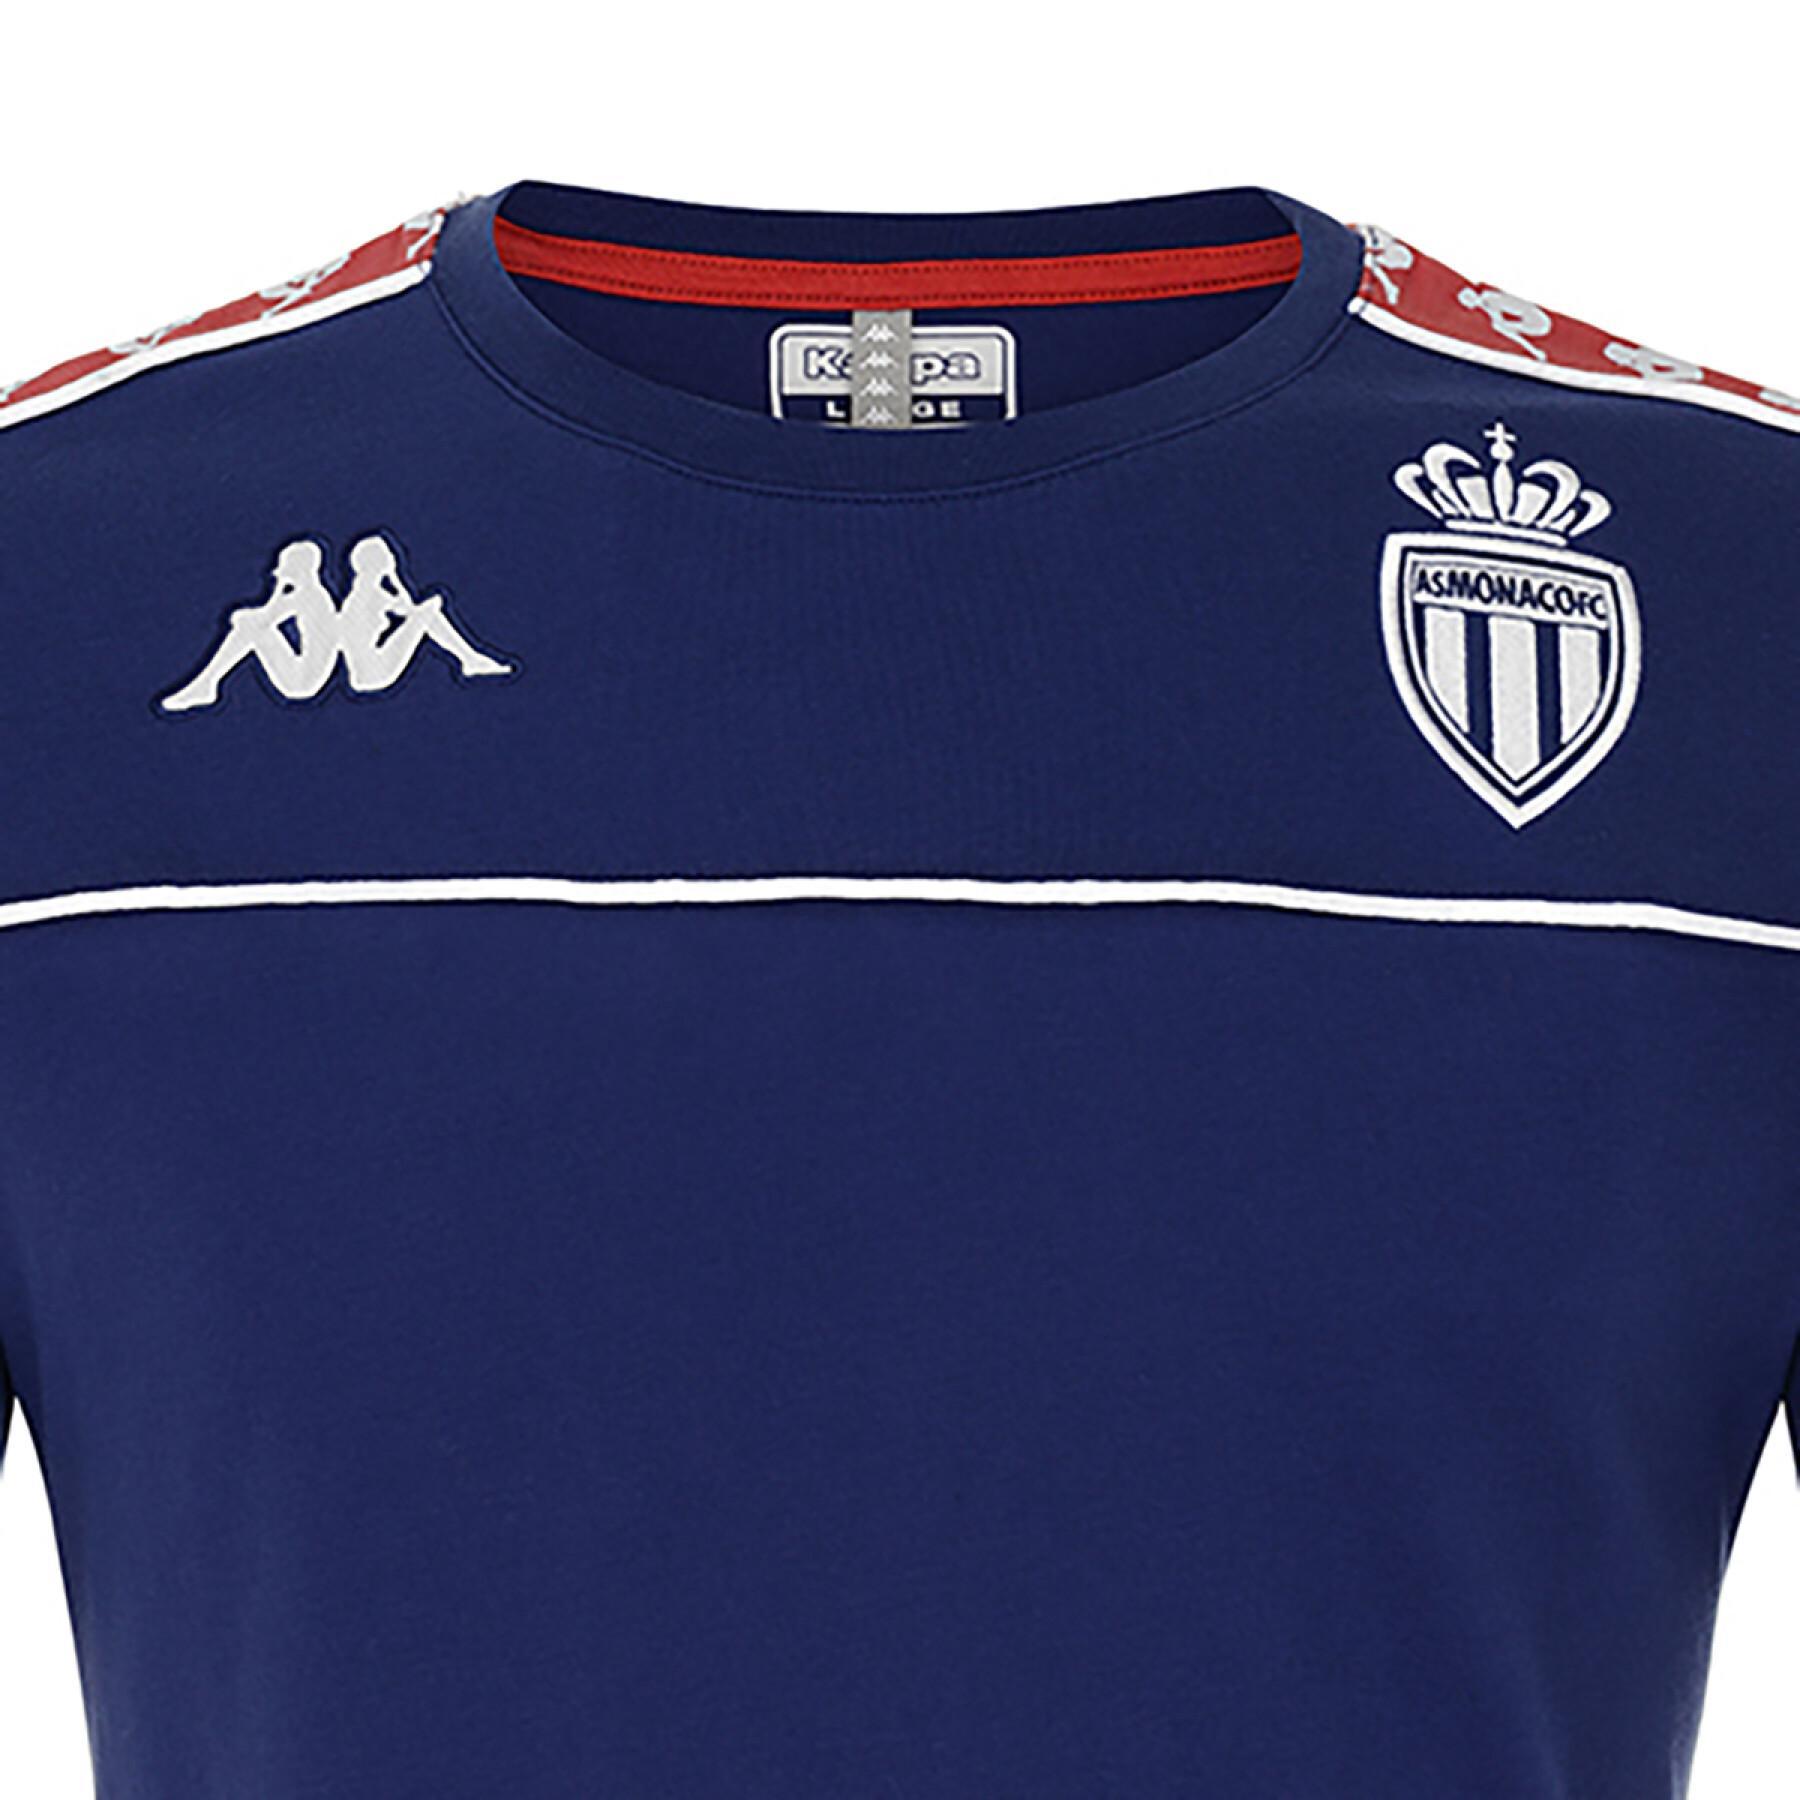 Camiseta niños AS Monaco 2021/22 222 banda arari slim